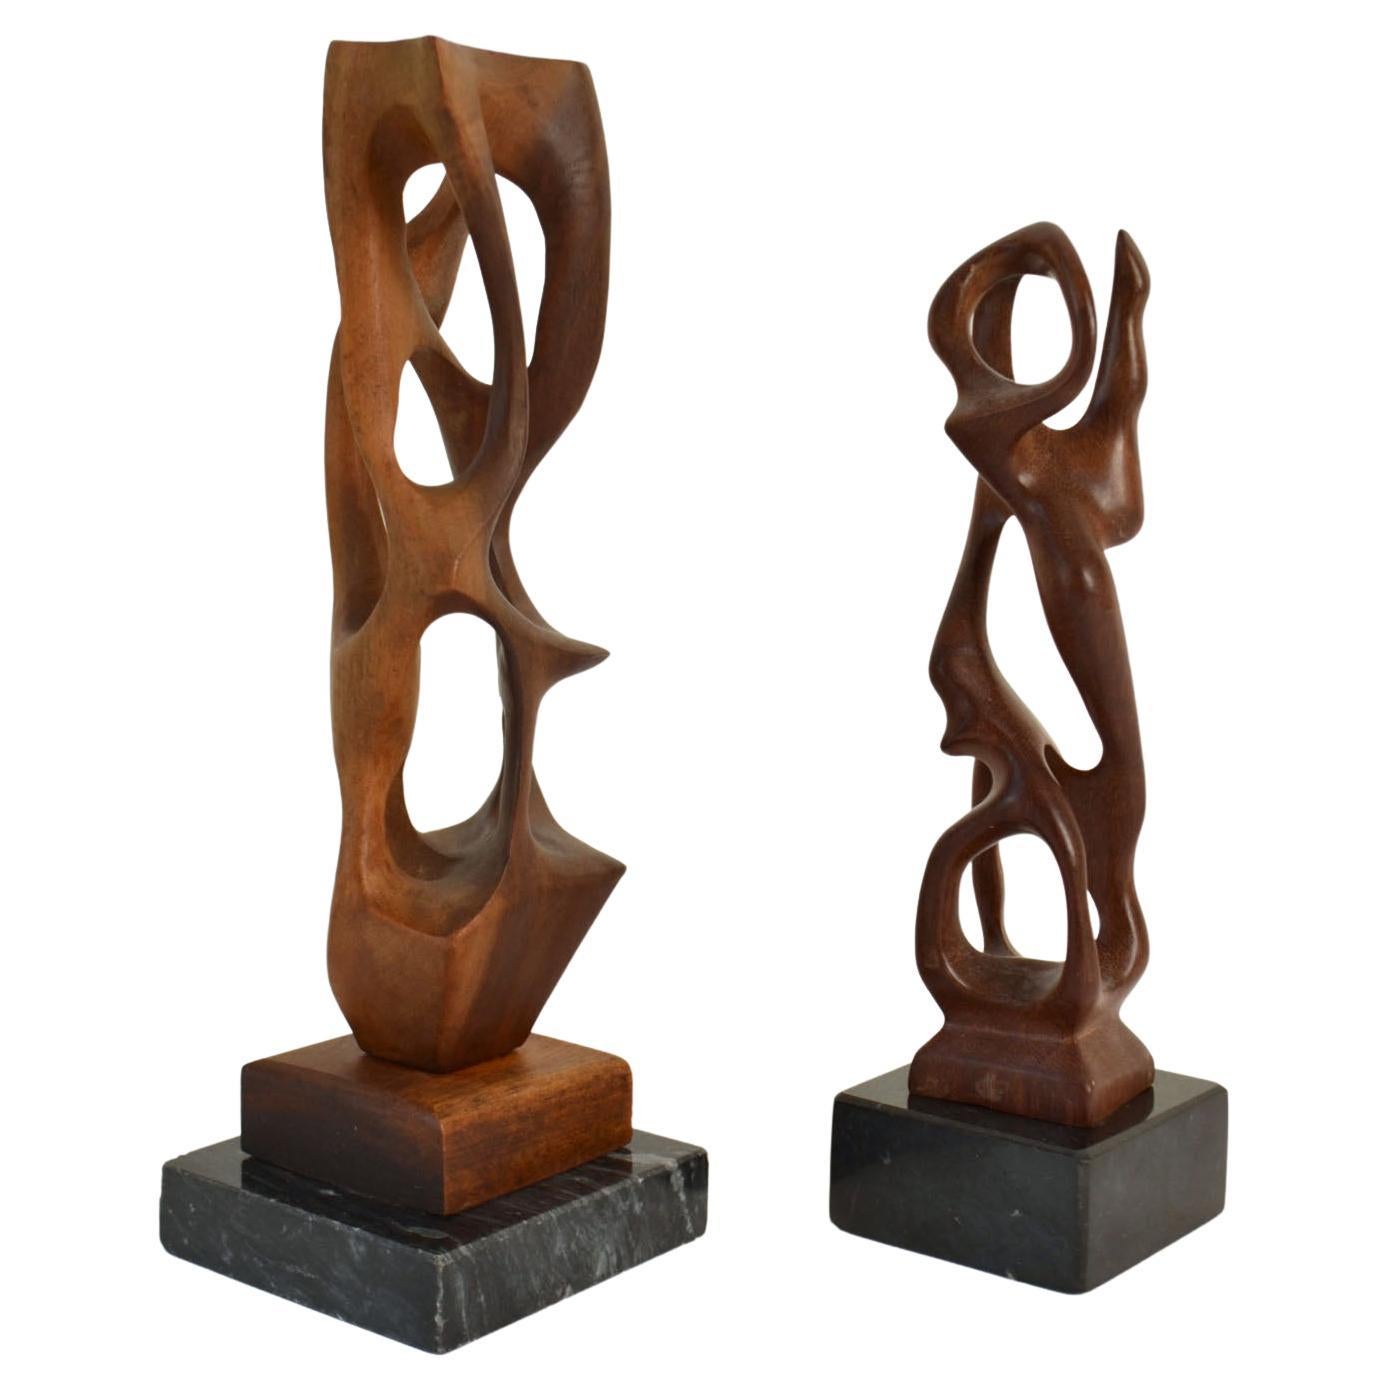 Vtg midcentury modernist abstract biomorphic wood bird sculpture